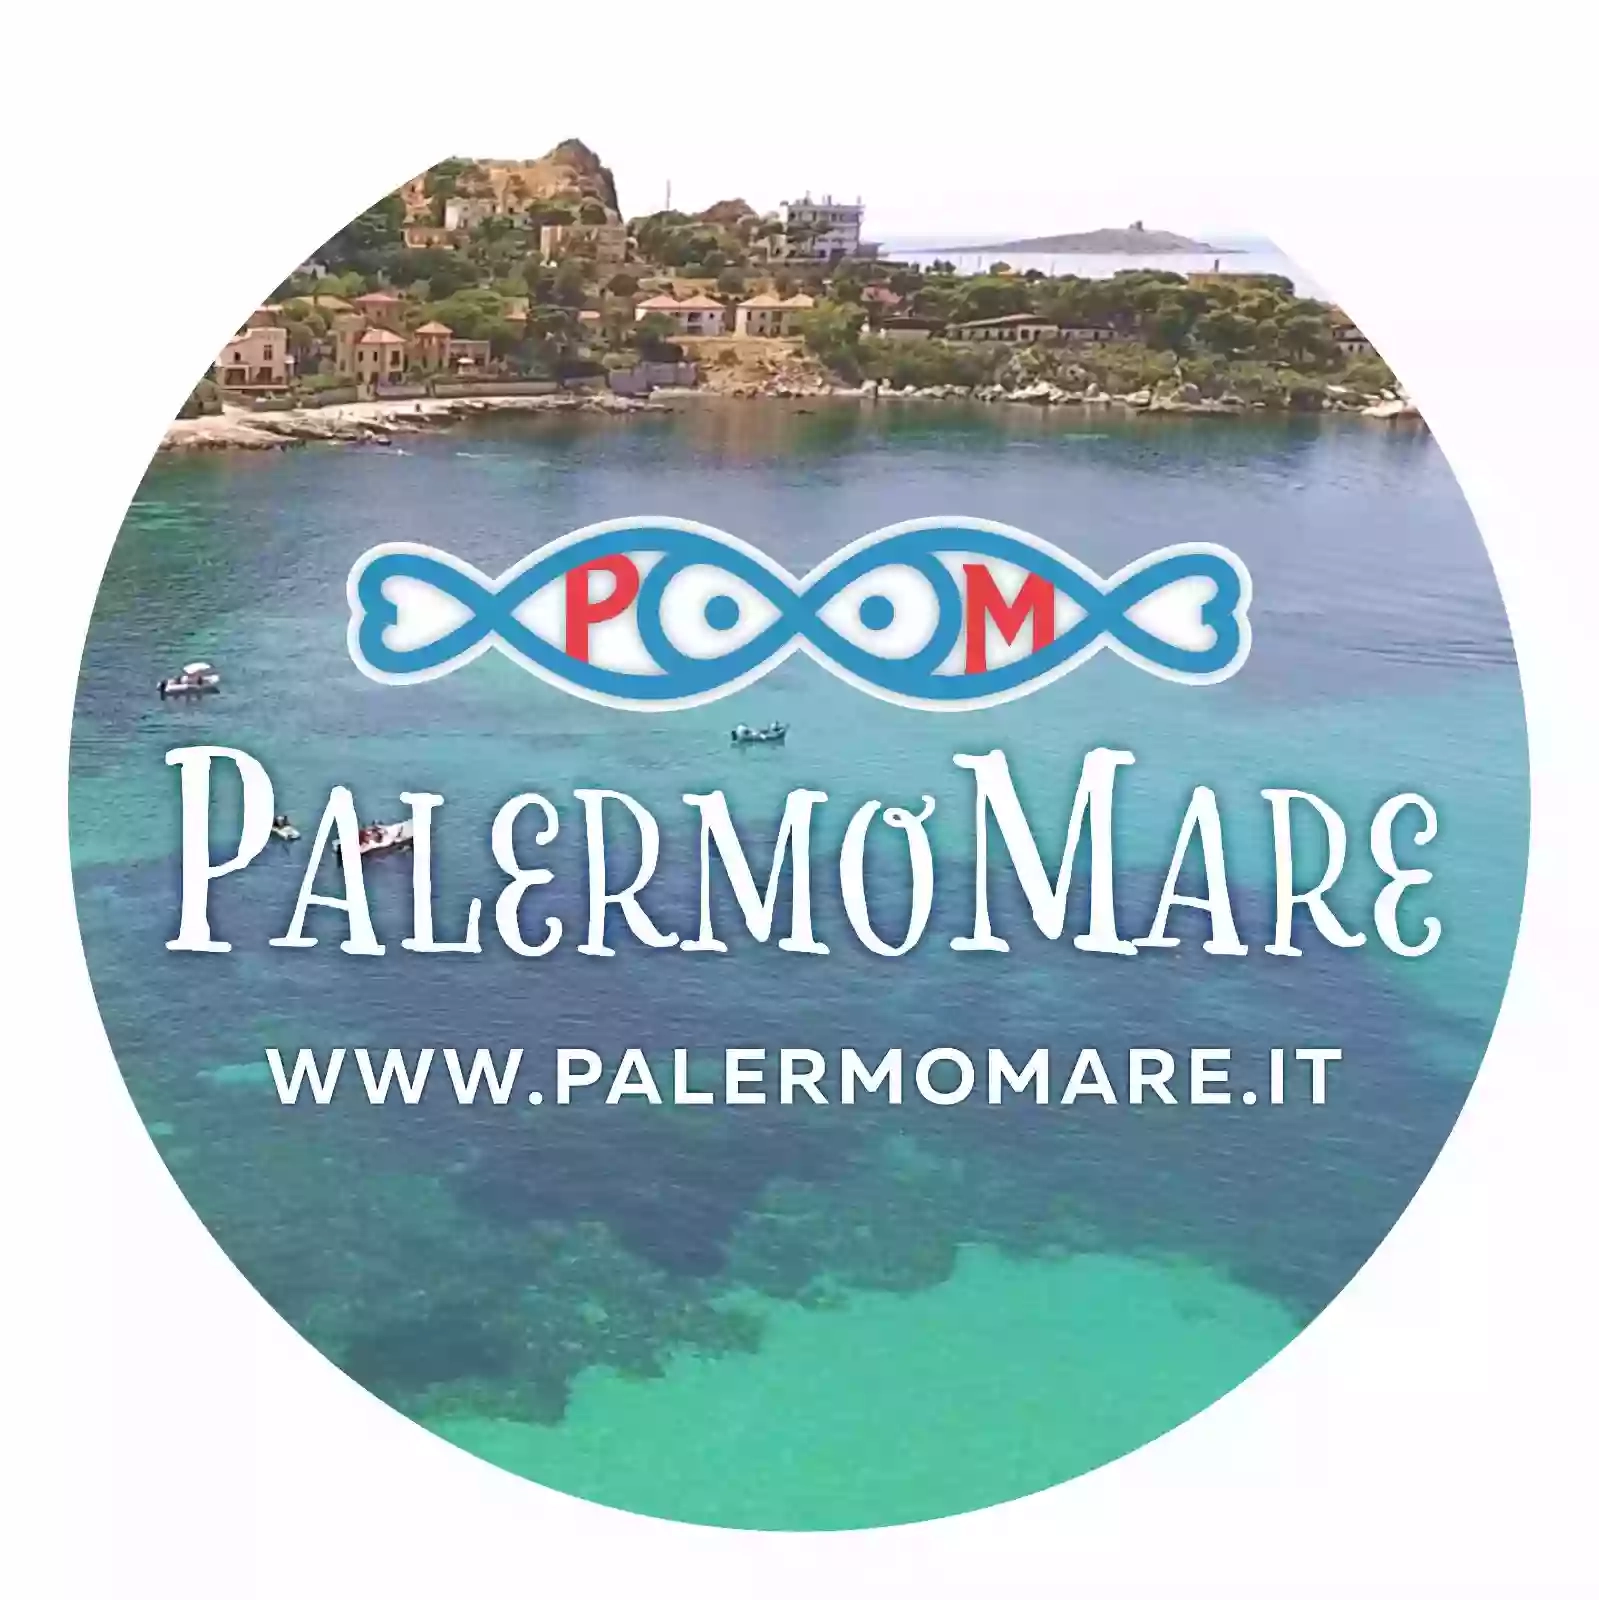 Palermo Mare Holidays